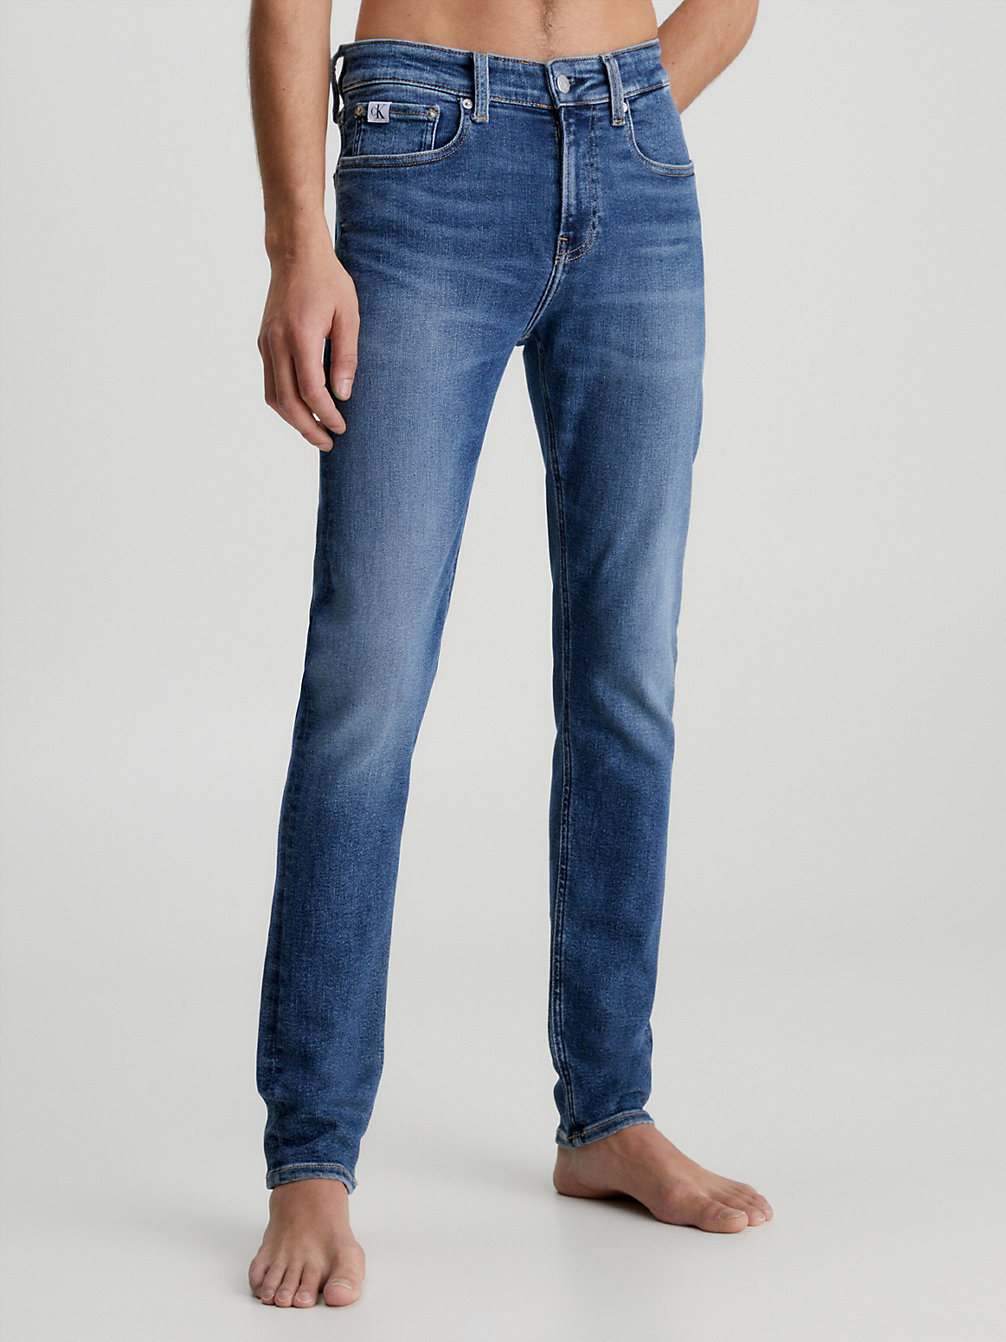 Men's Jeans Skinny, Slim-fit, Ripped & More | Klein®